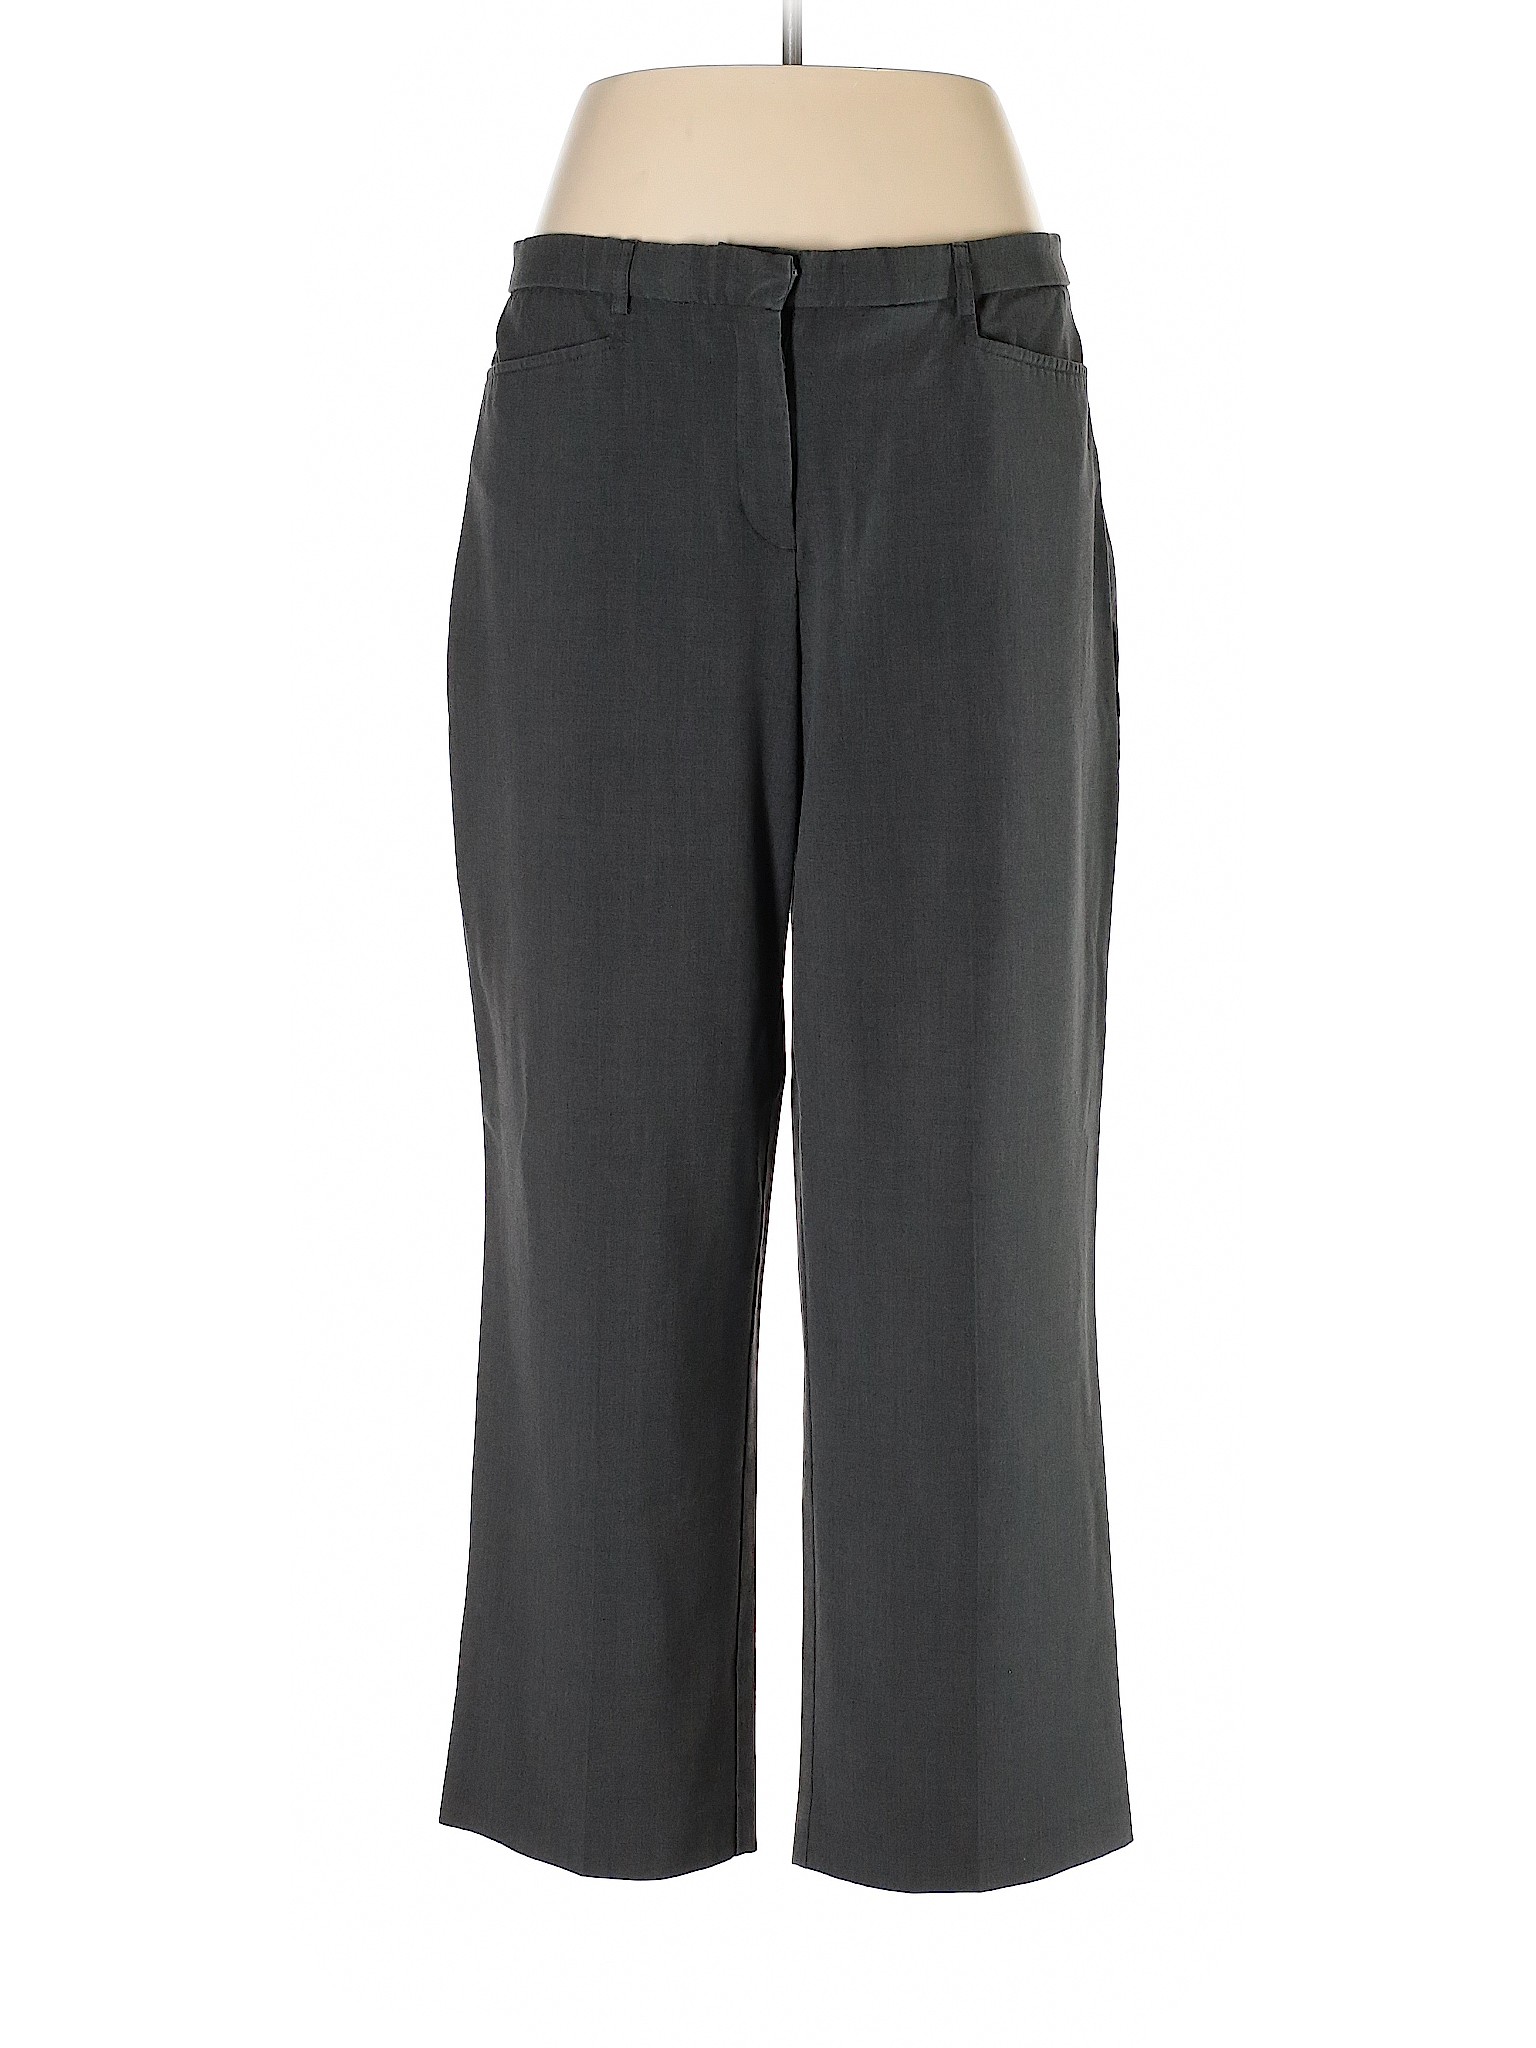 Counterparts Women Gray Dress Pants 16 | eBay